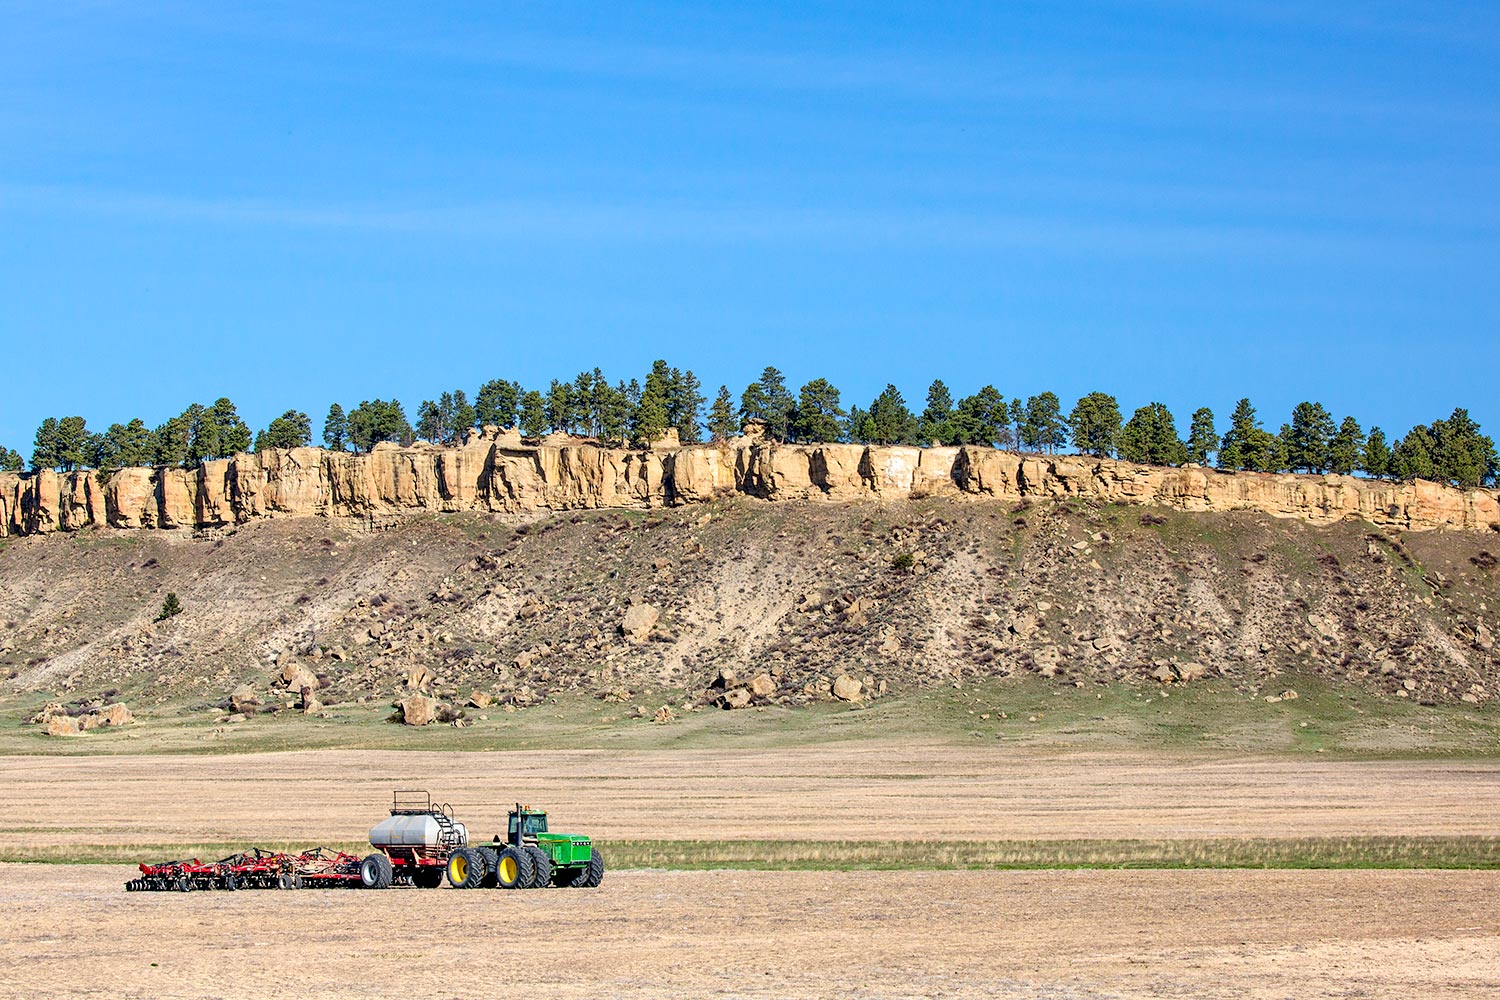 Farm equipment parked by the rimrocks near Ryegate, Montana.&nbsp;→ Buy a Print&nbsp;or License Photo